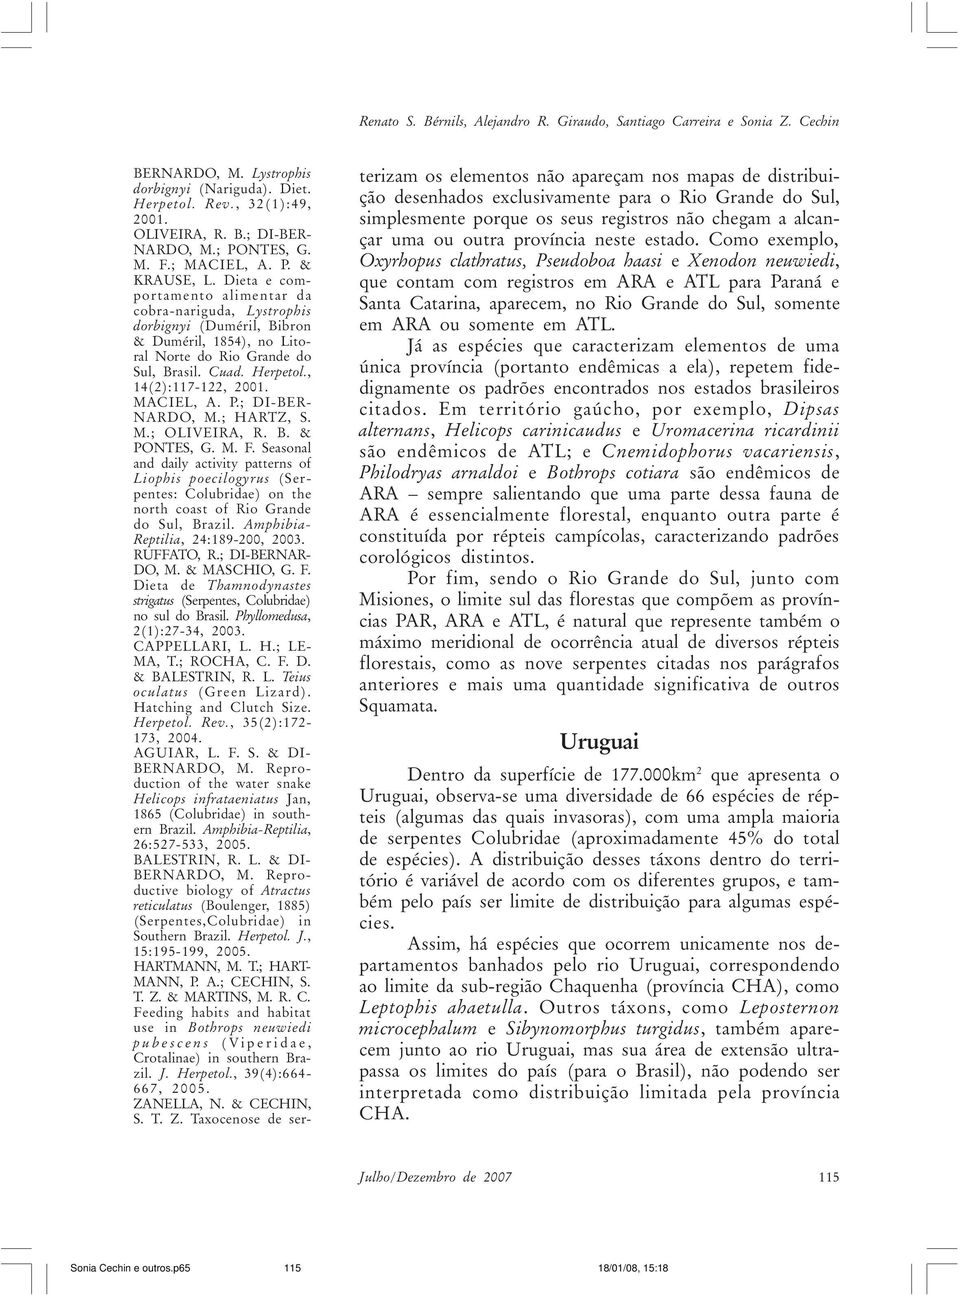 Cuad. Herpetol., 14(2):117-122, 2001. MACIEL, A. P.; DI-BER- NARDO, M.; HARTZ, S. M.; OLIVEIRA, R. B. & PONTES, G. M. F.